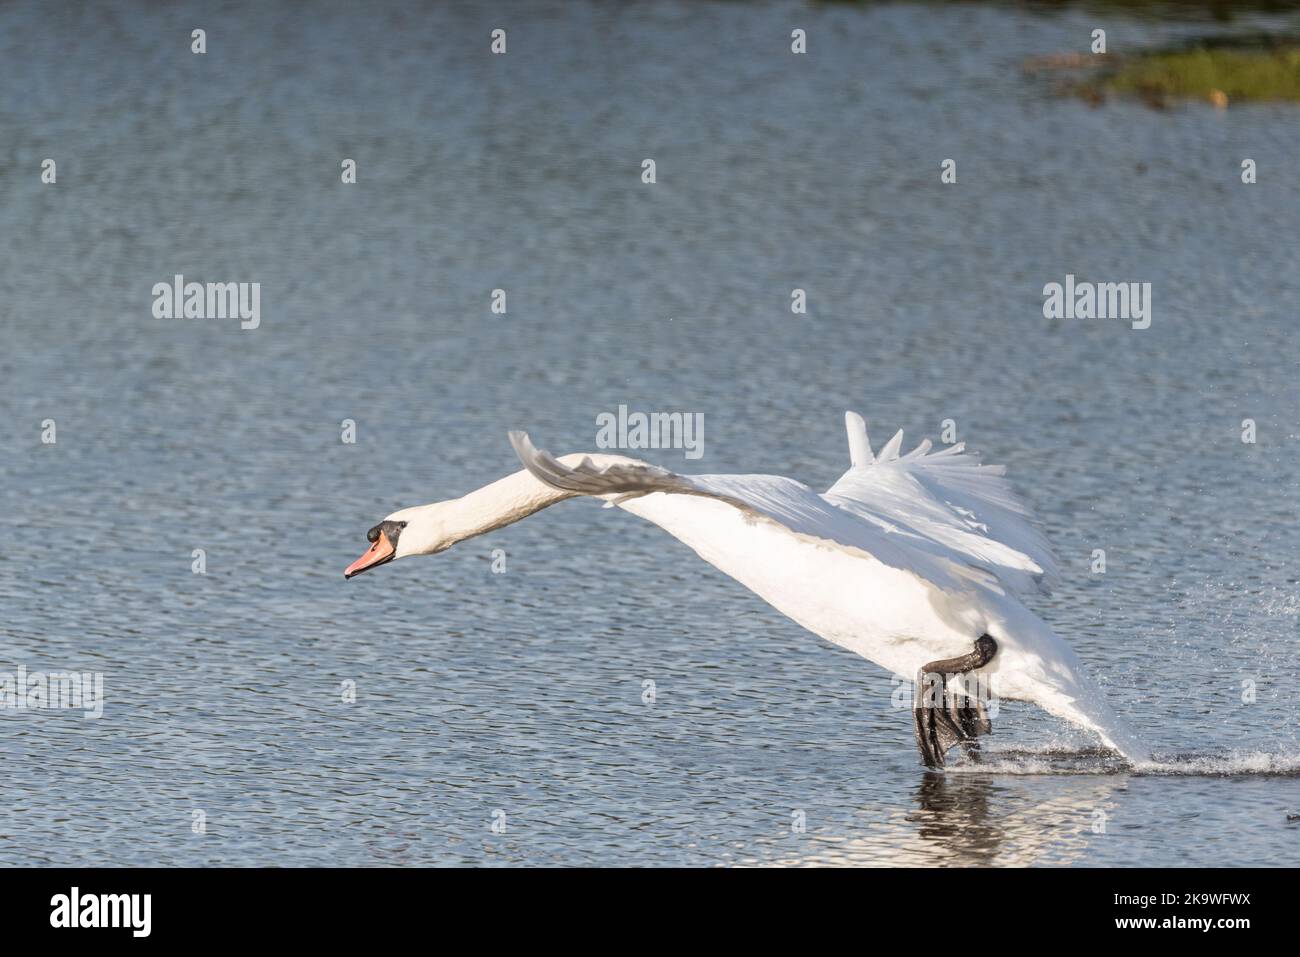 Flying Cisne (Cygnus olor) Foto de stock